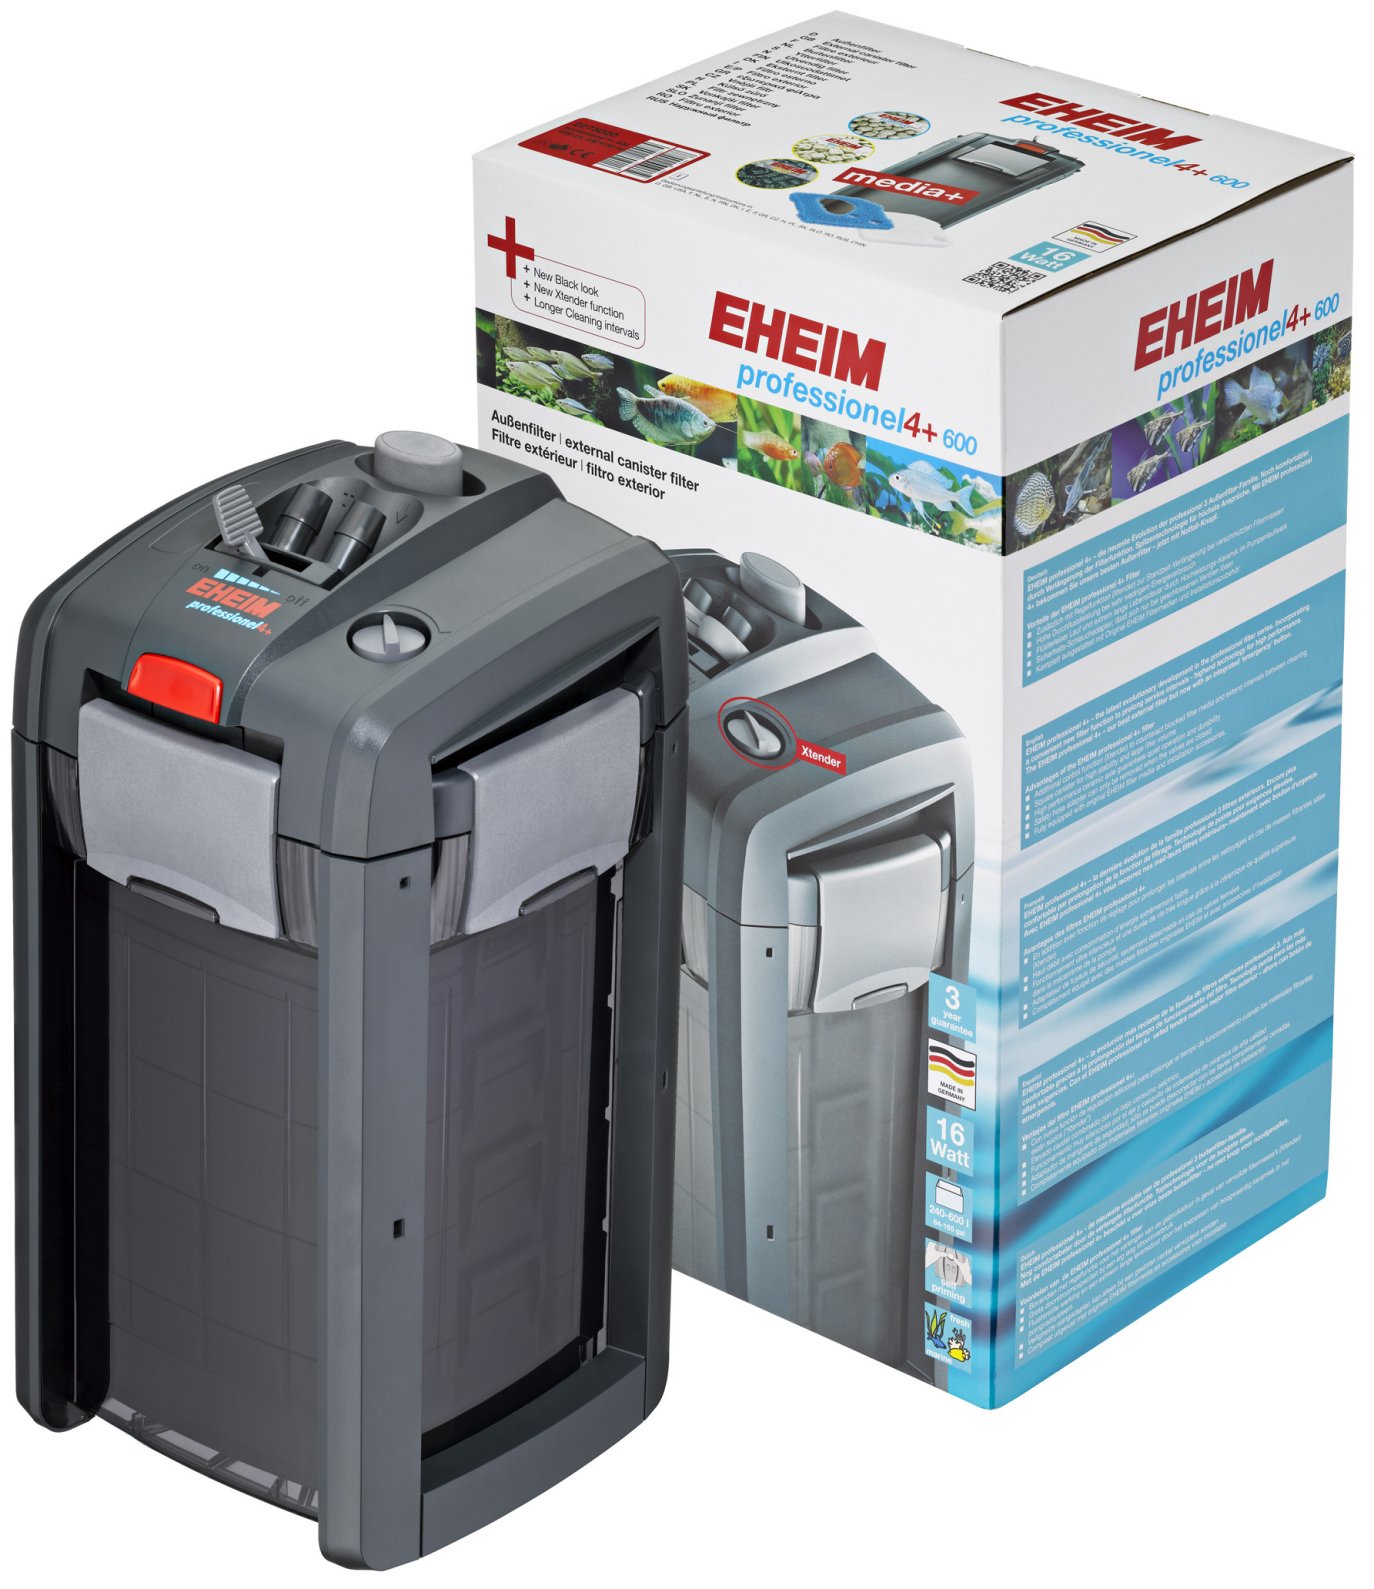 EHEIM professionel 4+ 600 (2275) | External Filter | up to 600 L